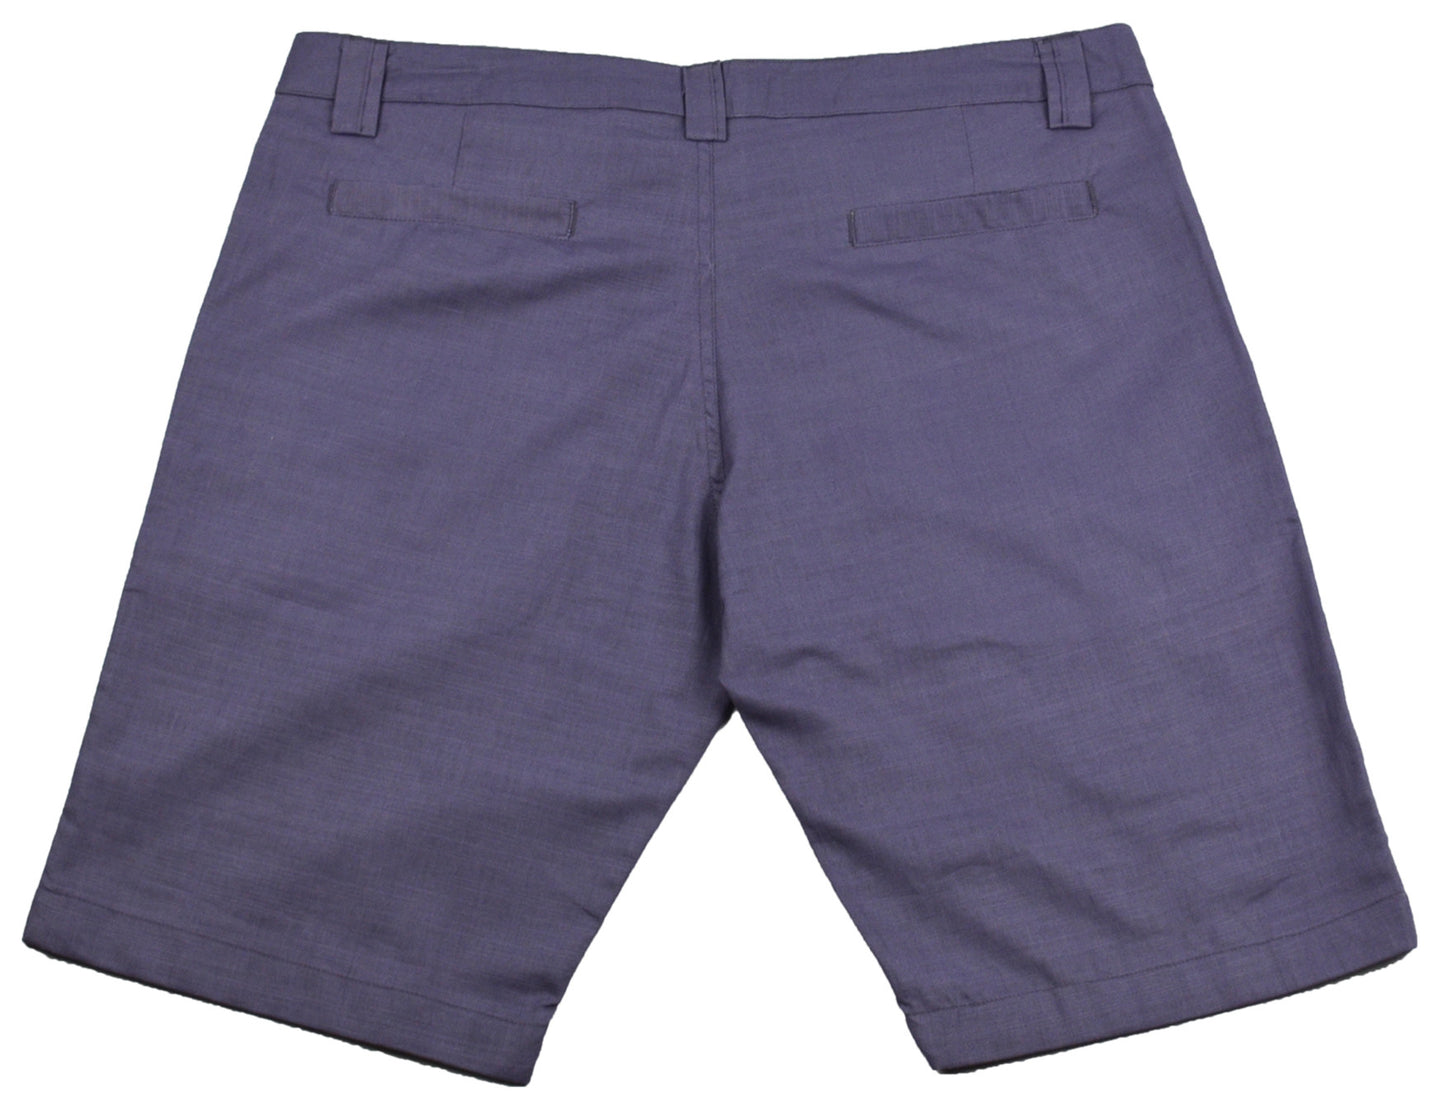 Purple/Gray Cotton Shorts - Happy Pants - 2